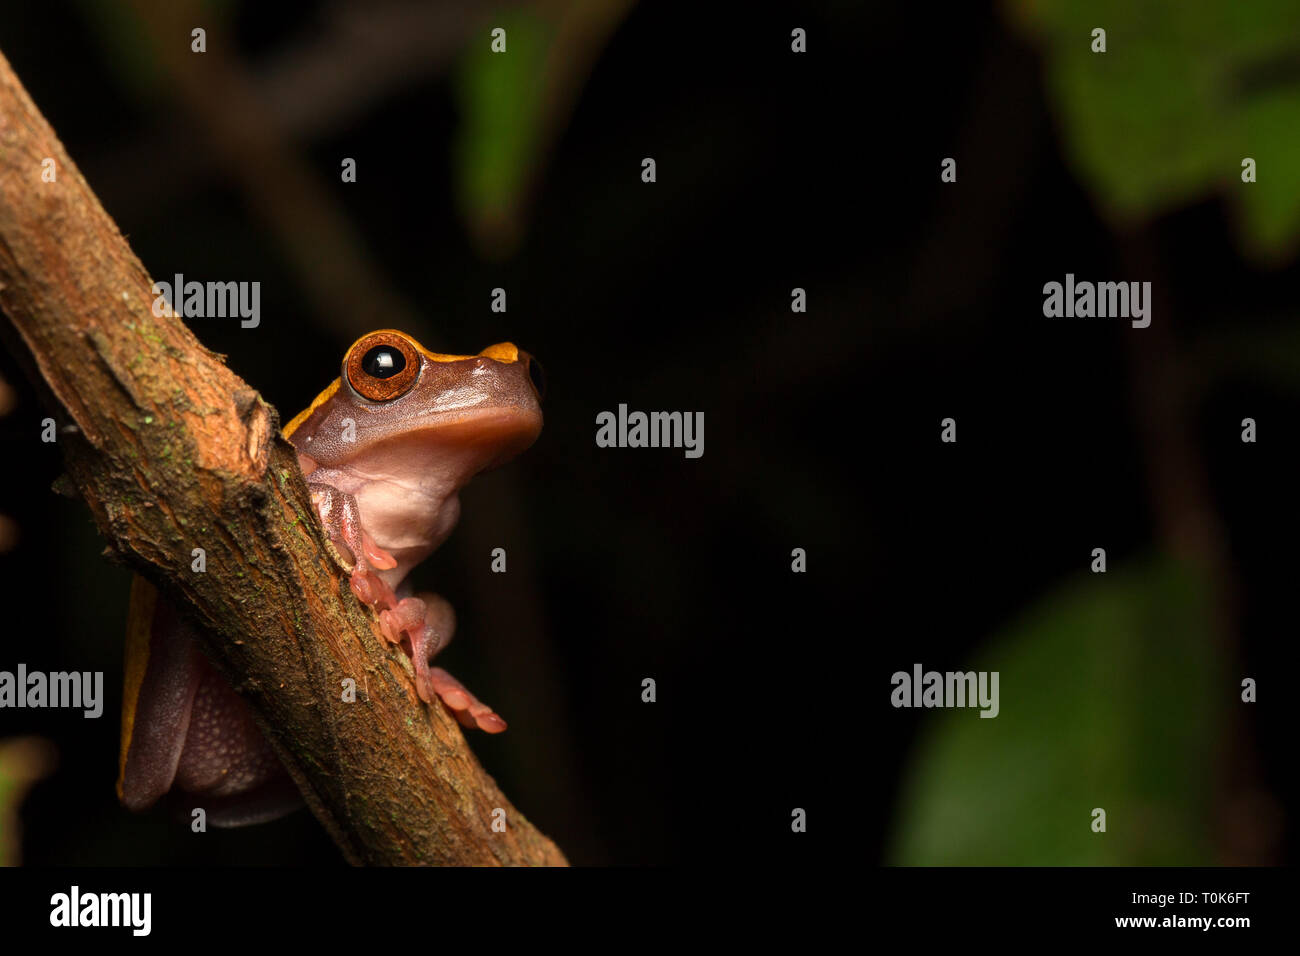 Tropical Amazon rain forest tree frog, Dendrosophus triangulum Stock Photo